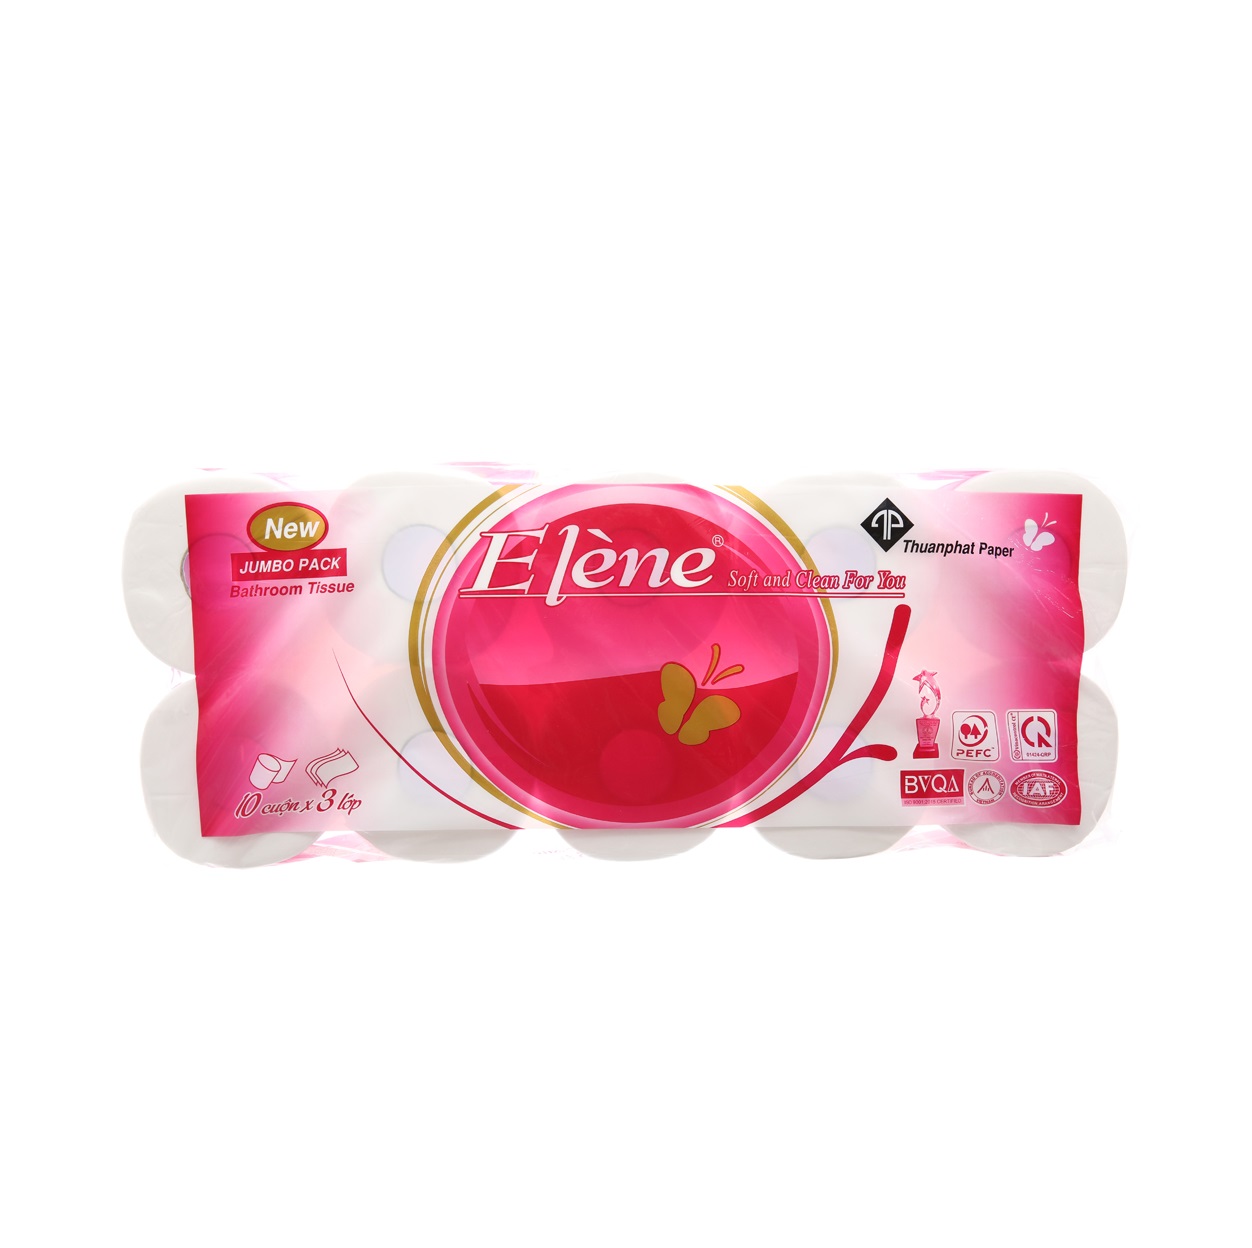 Giấy vệ sinh Elene 10 cuộn hồng